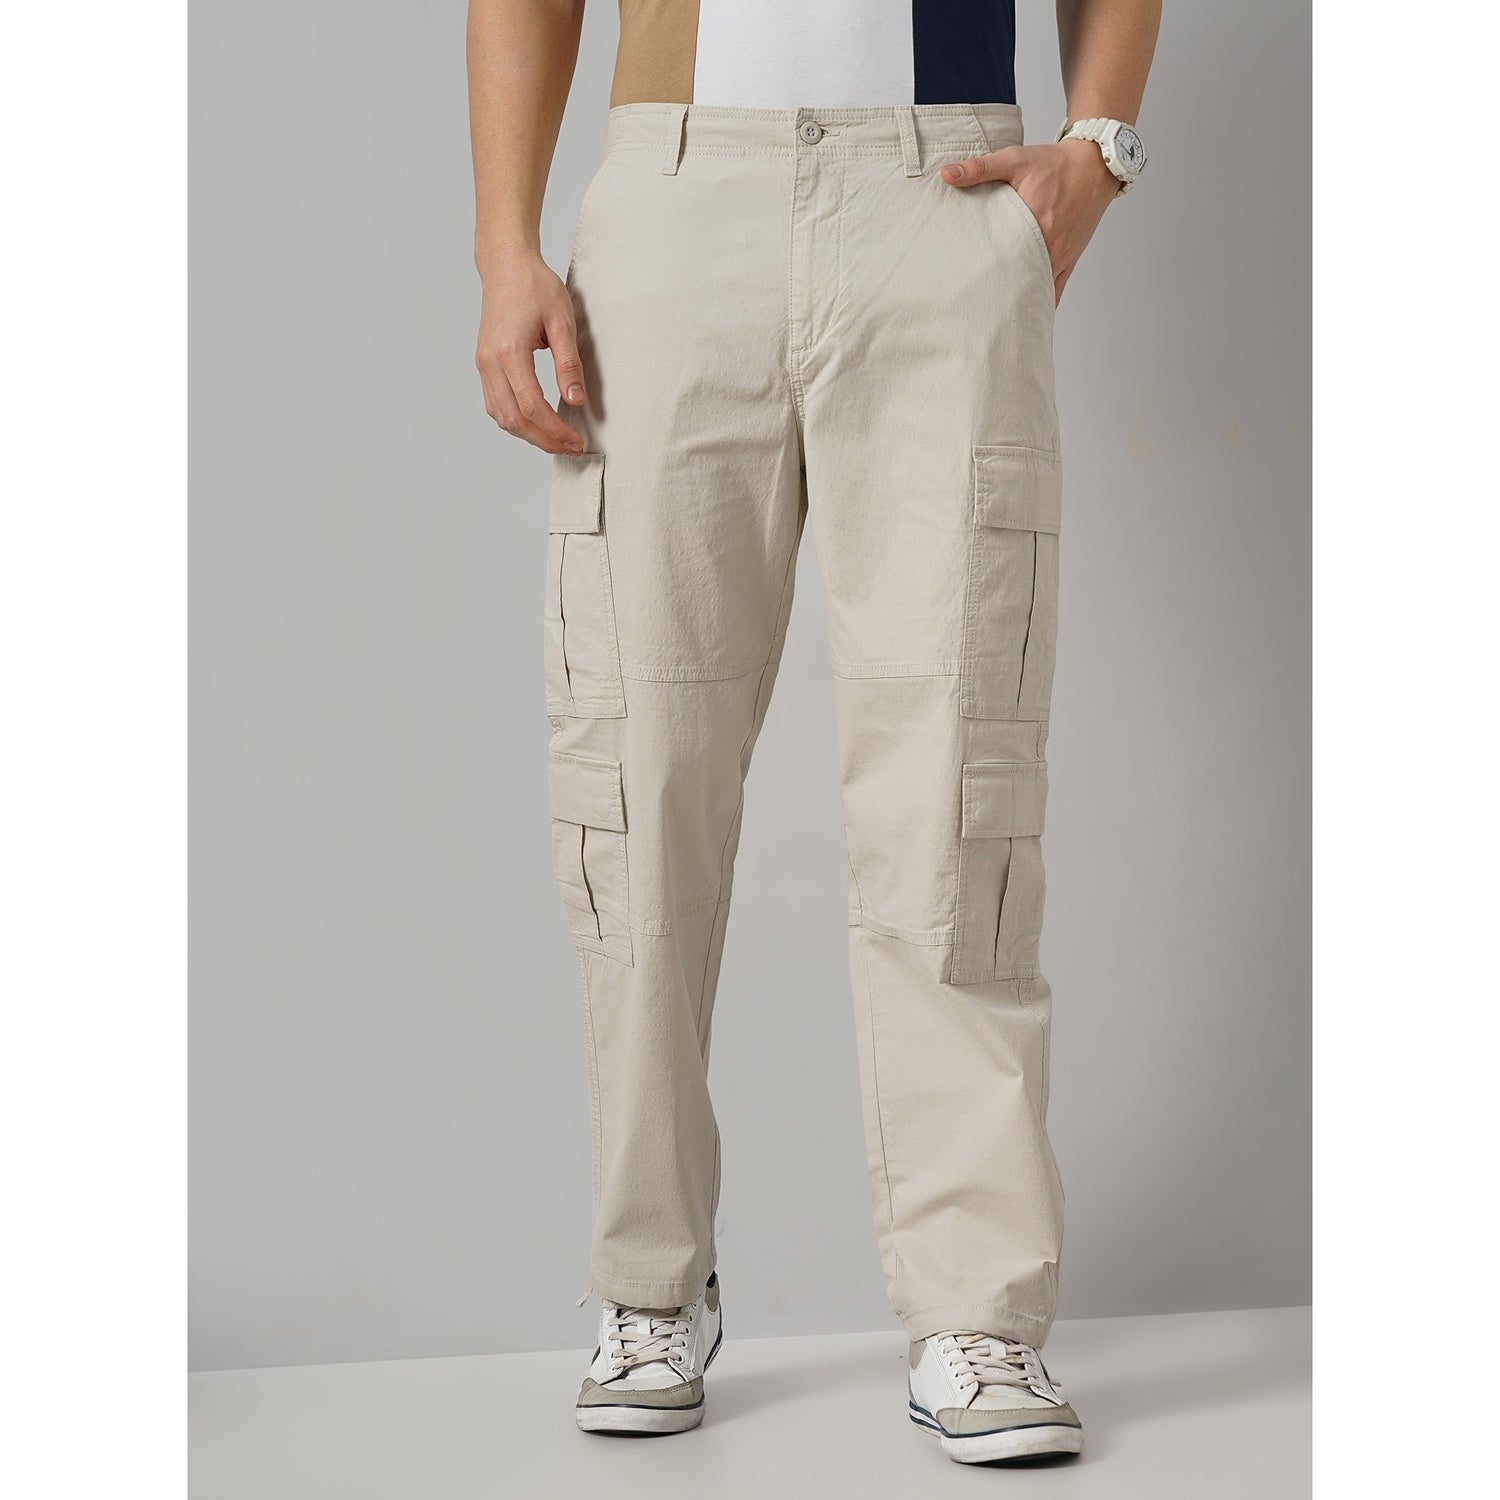 Men's Beige Solid Regular Fit Cotton Trousers (GONICO)